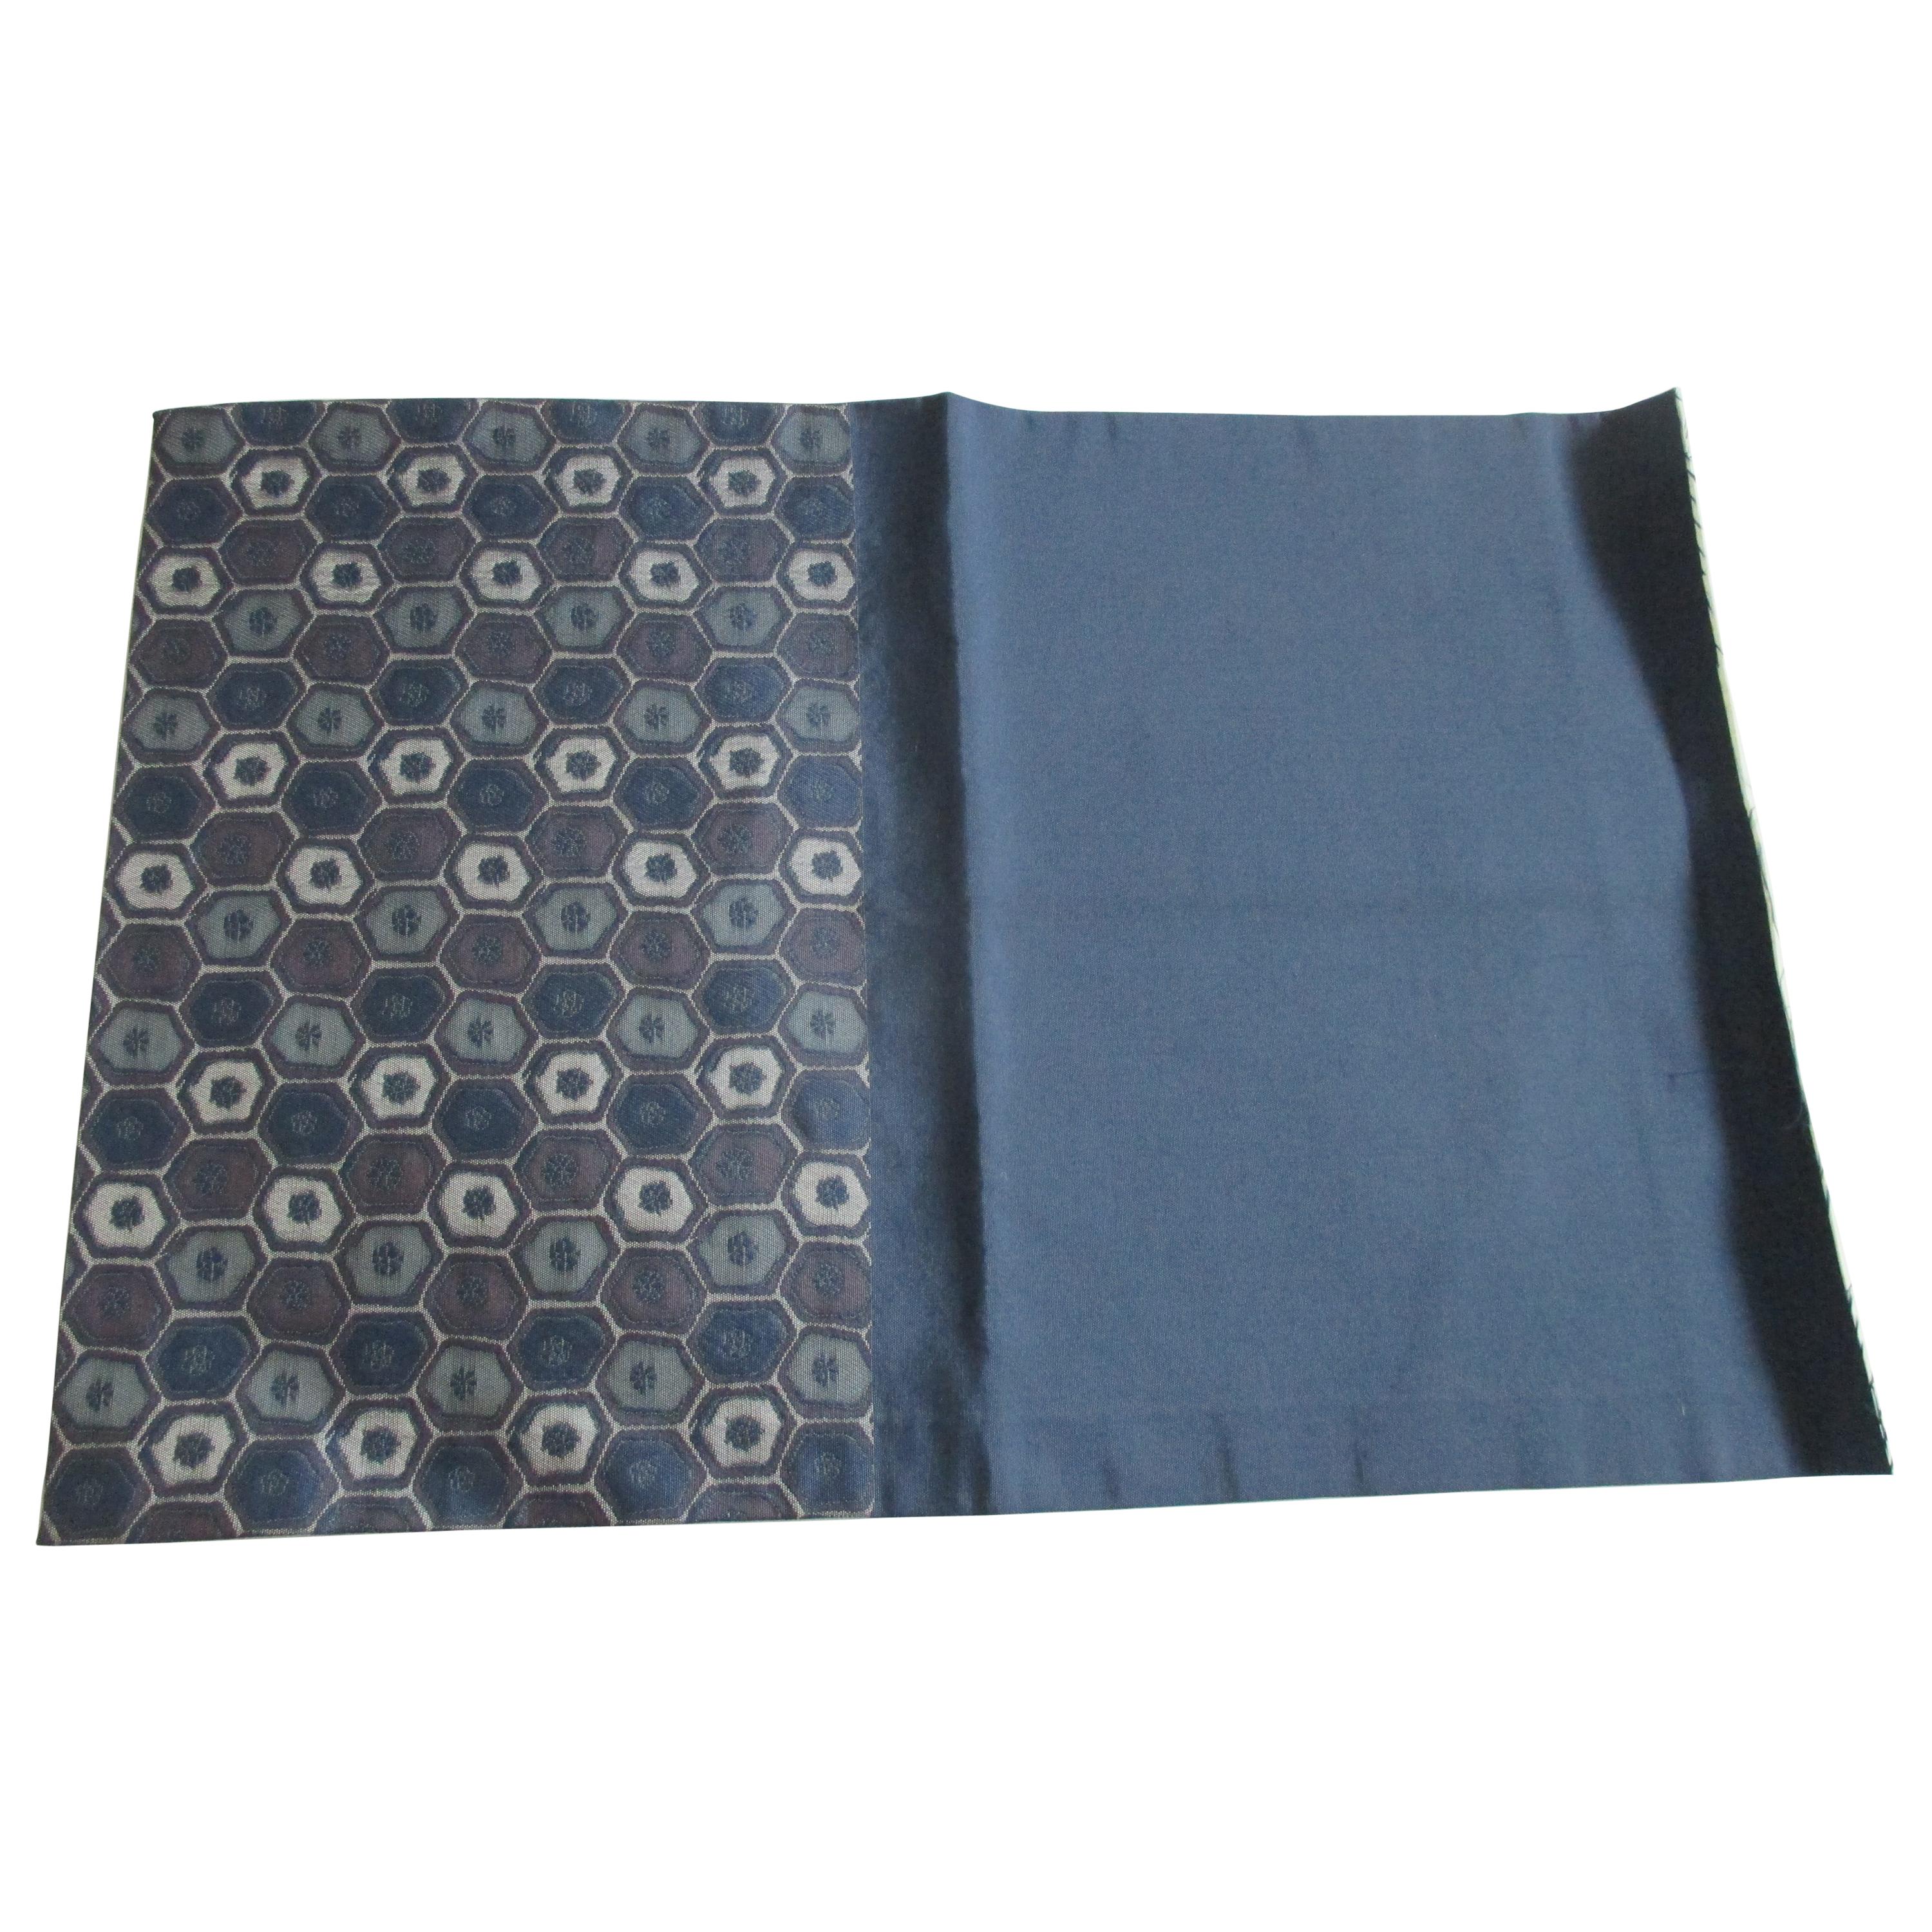 Vintage Blue and Grey Silk Obi Textile with Hexagonal Designs Fragment